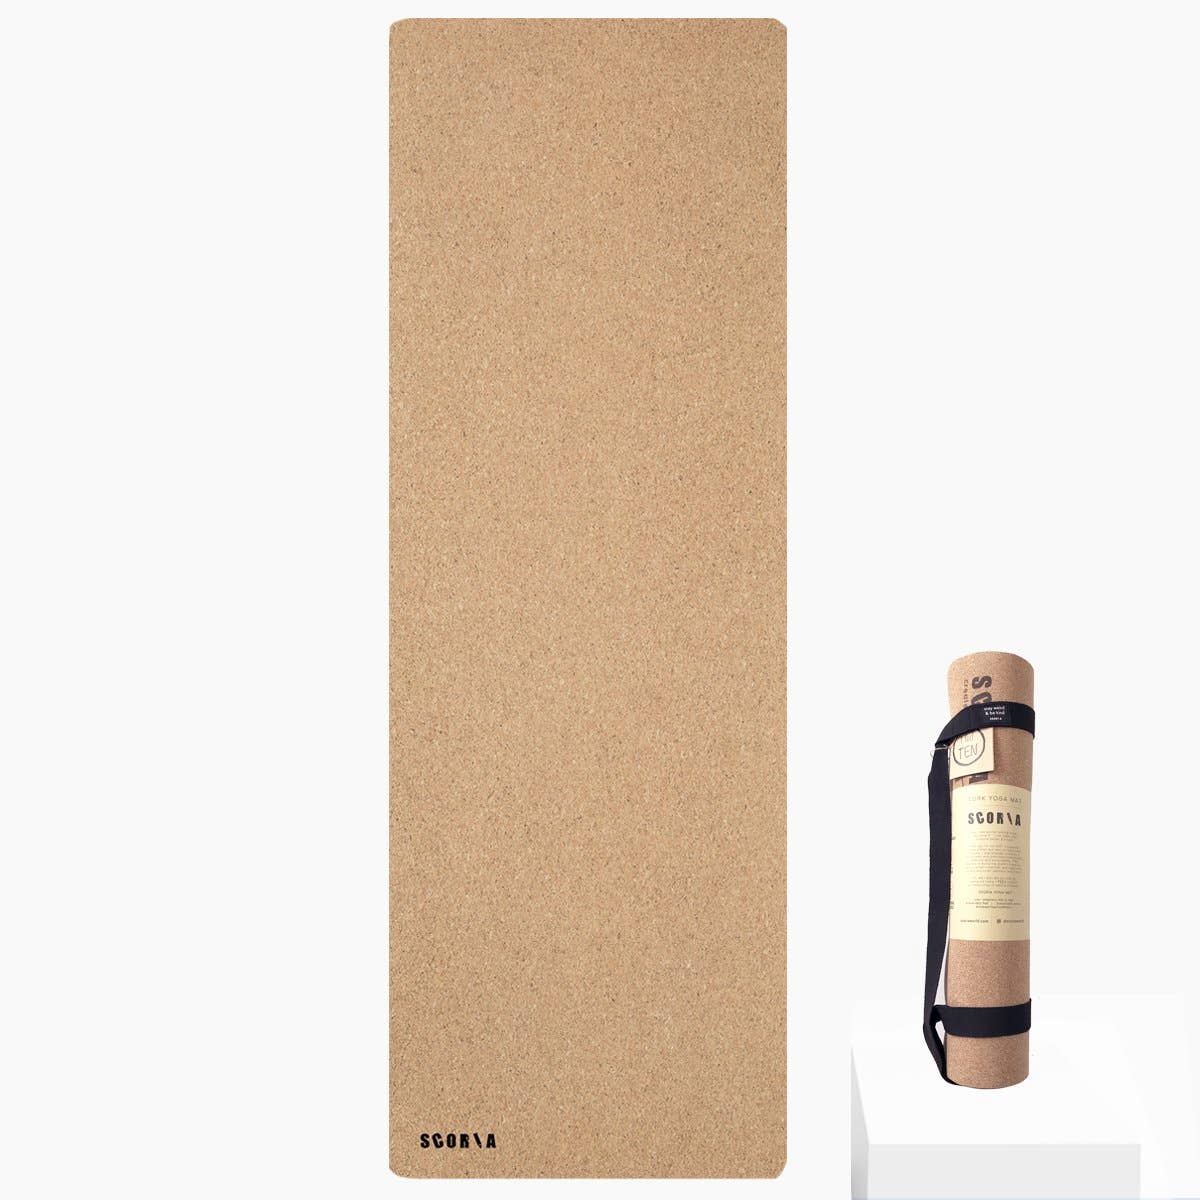 EXTRA-Thick Cork Yoga Mat by Scoria (6mm)